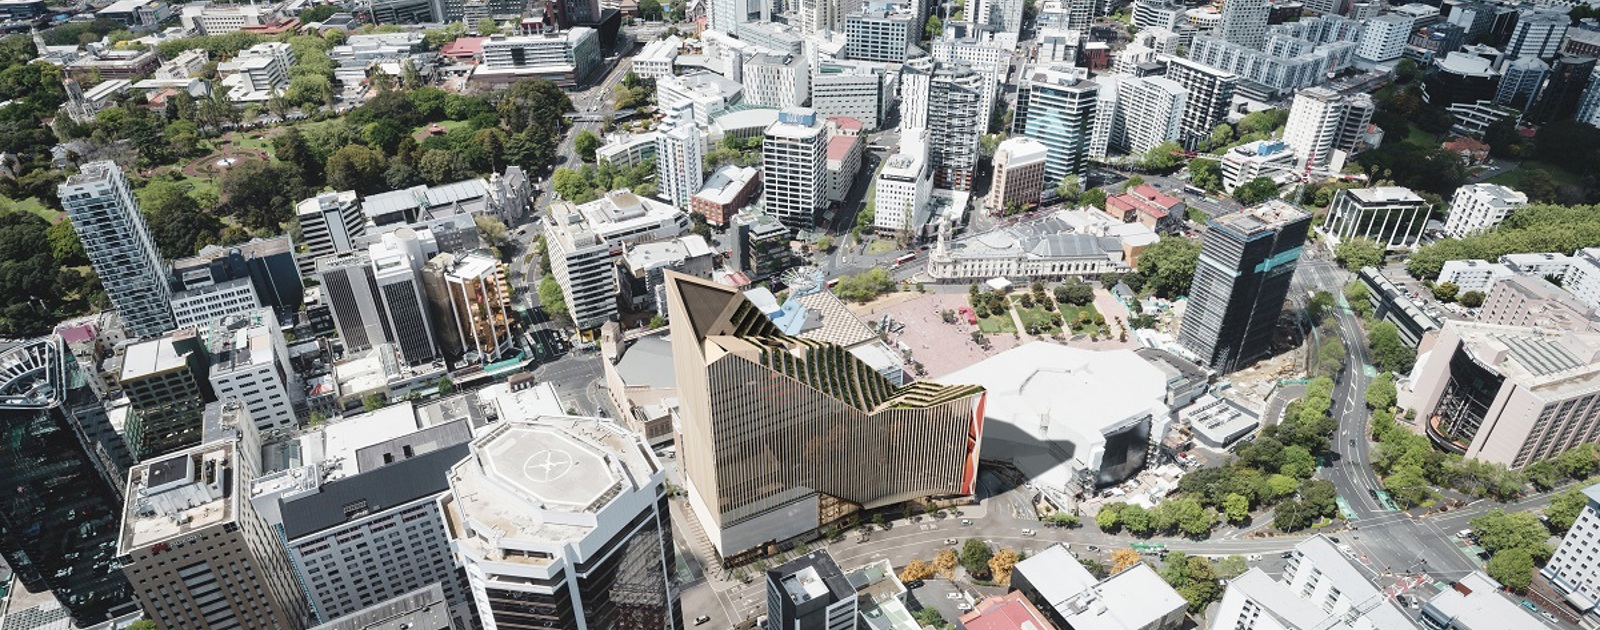 Aotea Over Station Development - The Symphony Centre